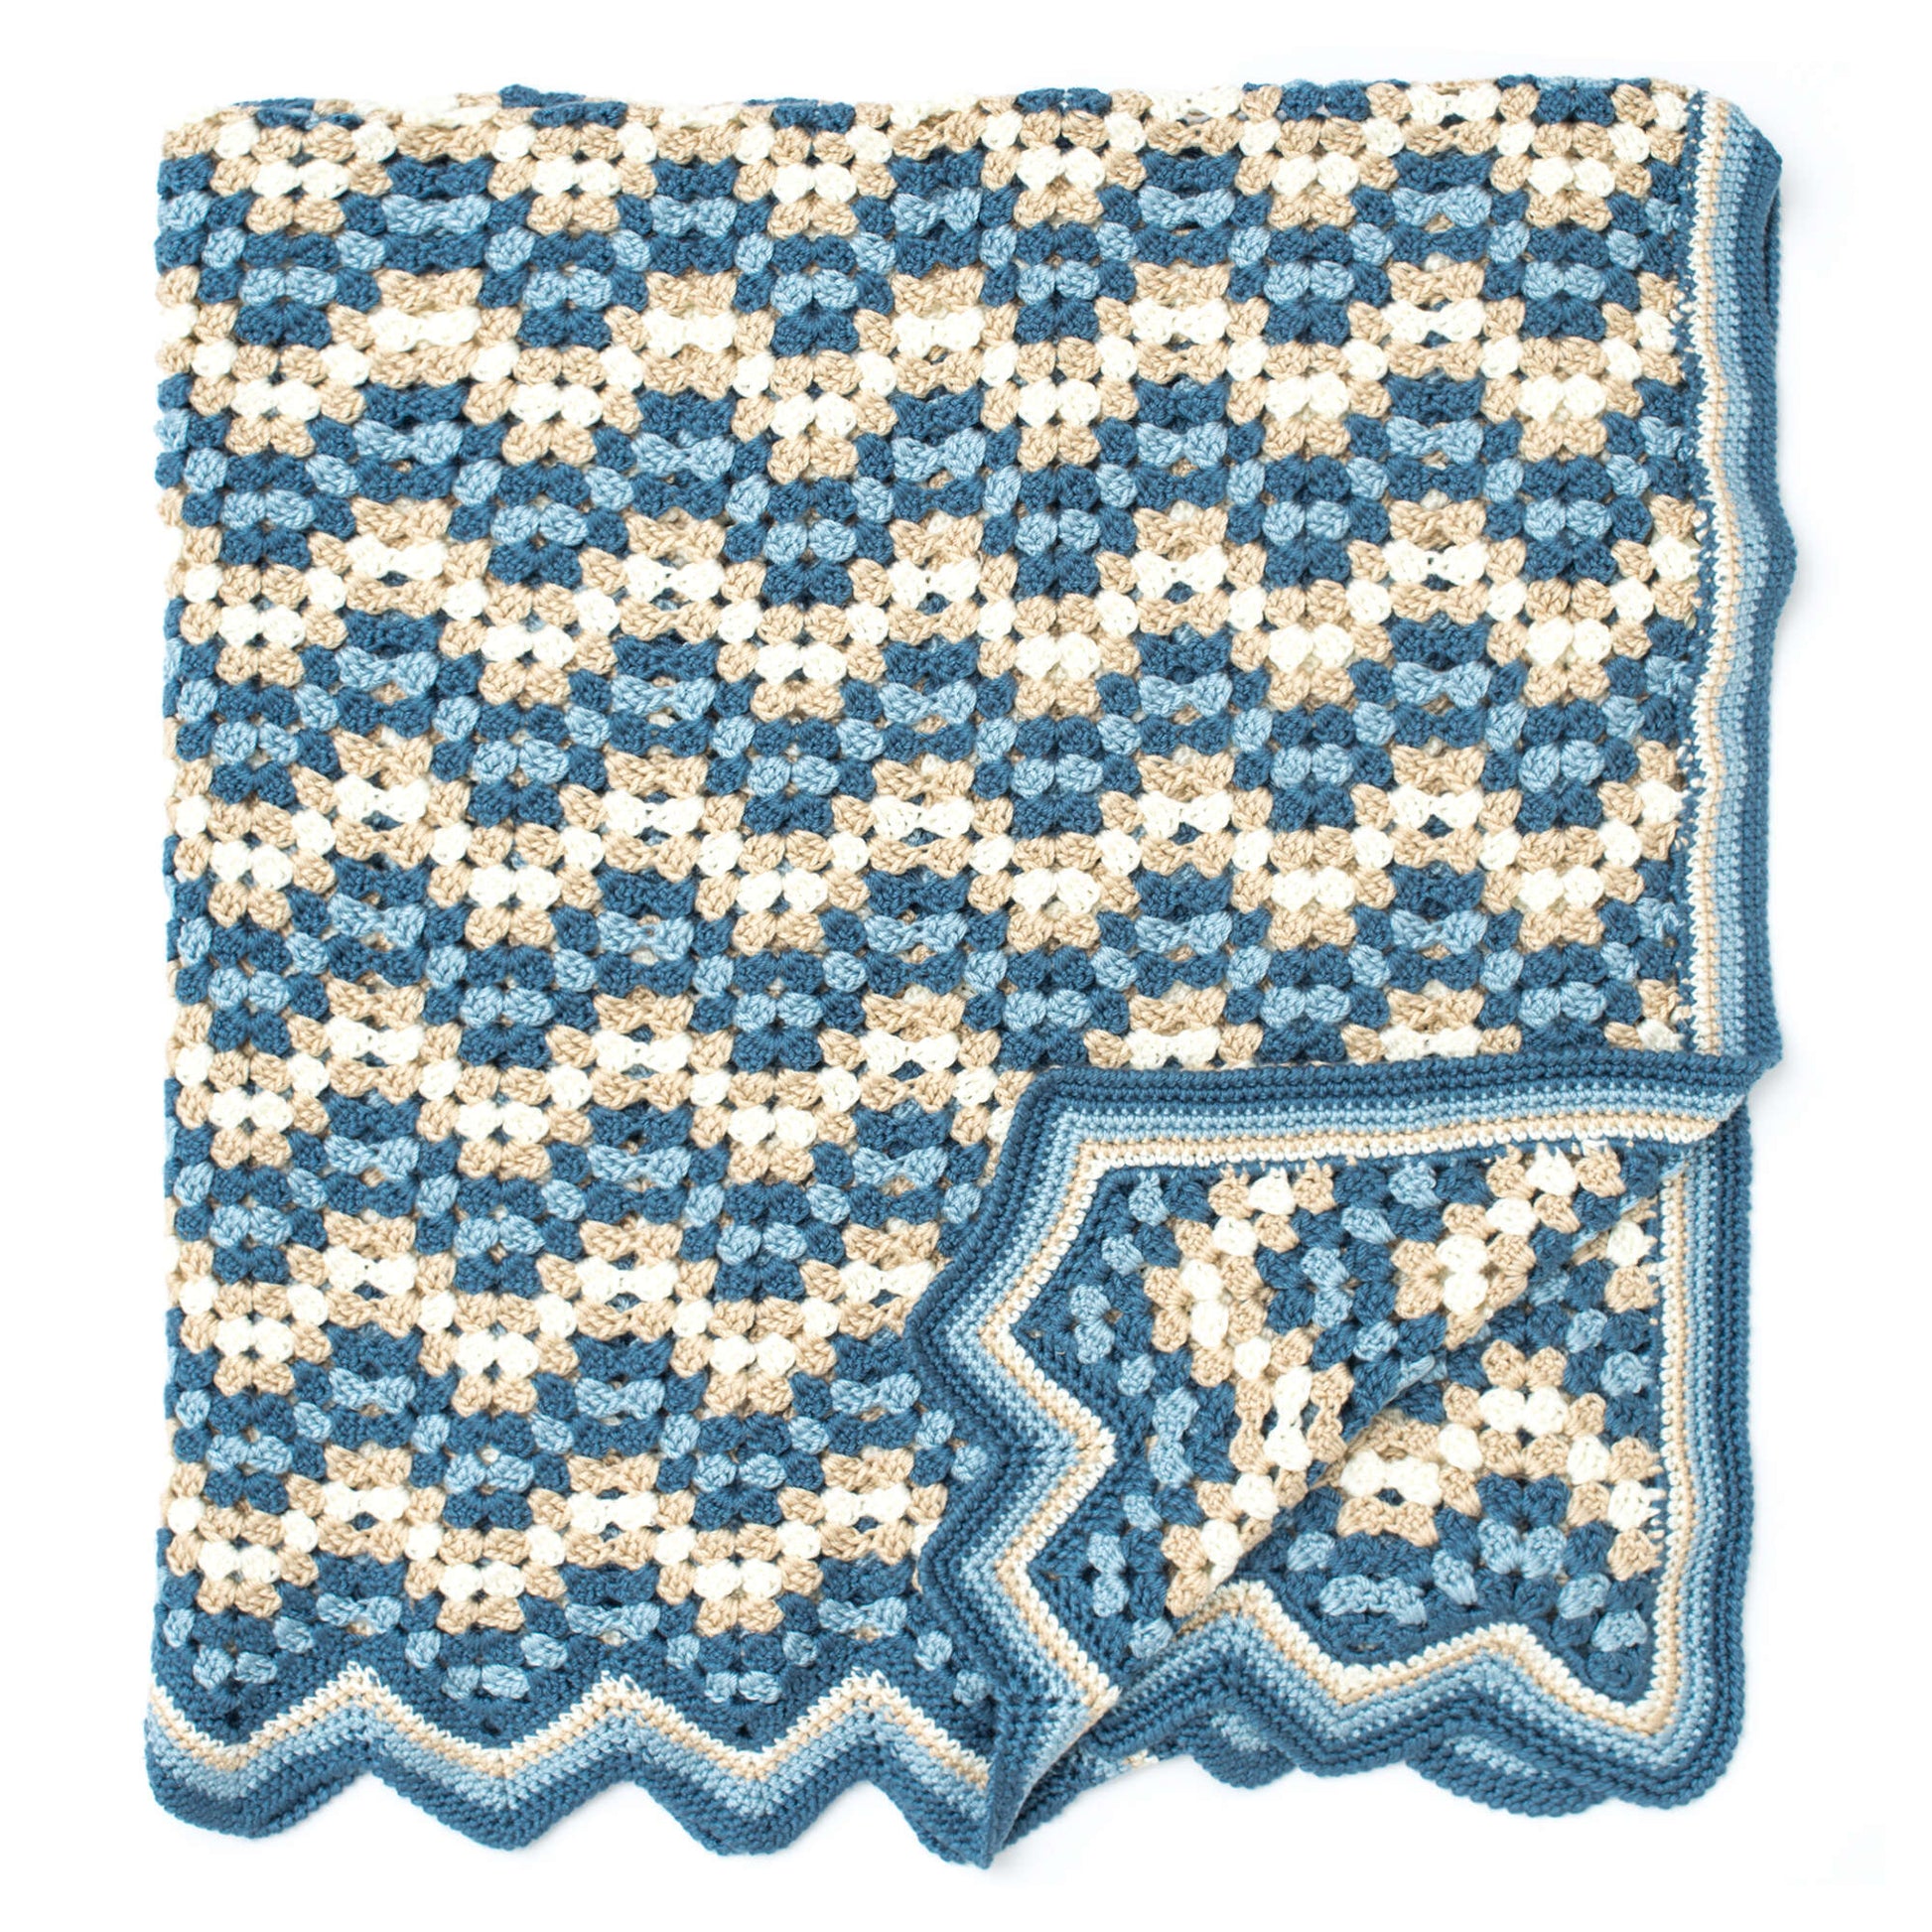 Free Caron Crochet Granny Goes Ripple Pattern